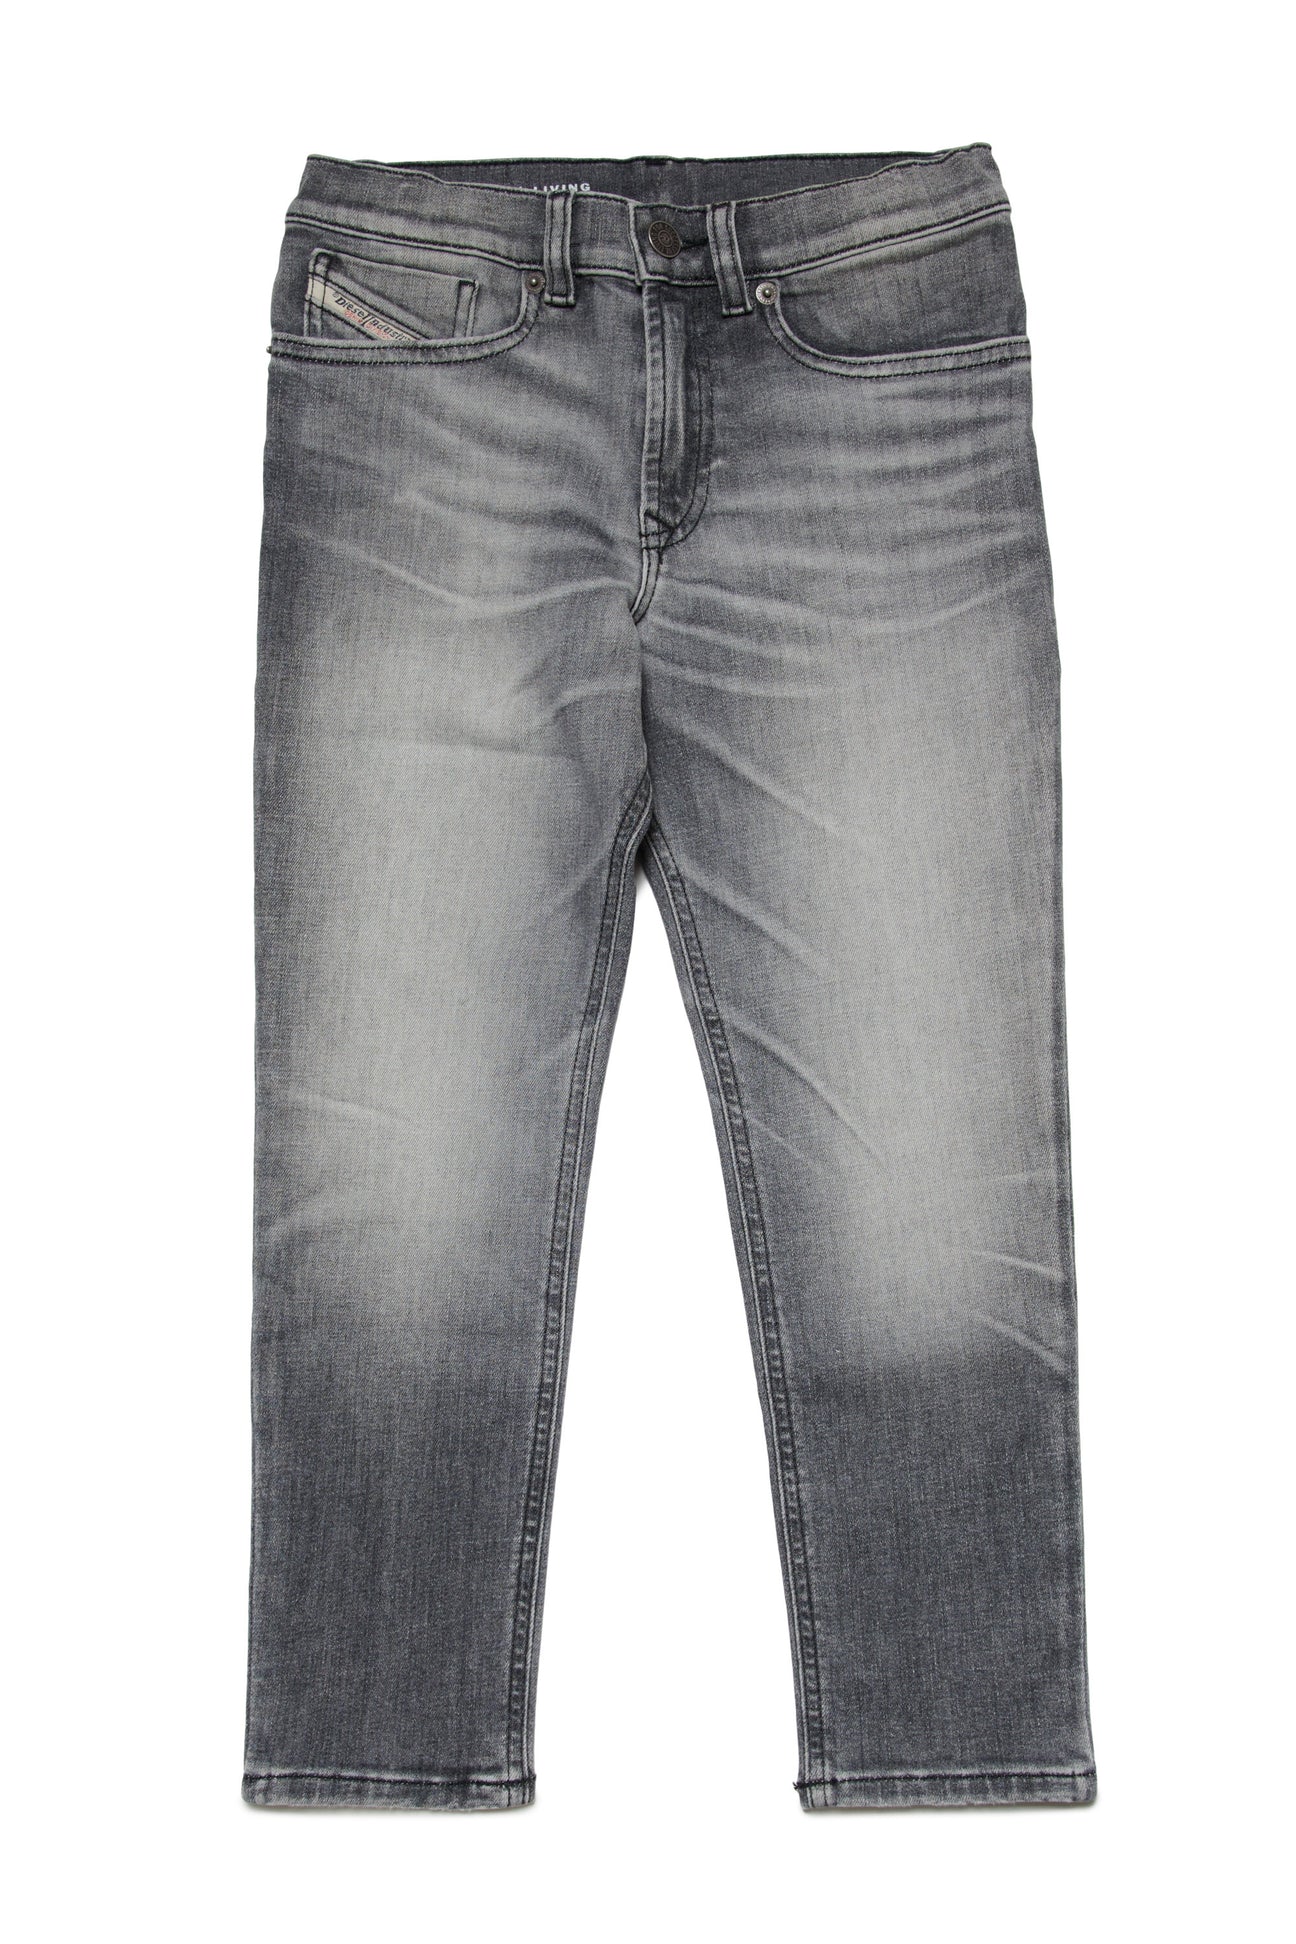 Shaded gray regular jeans - 2005 